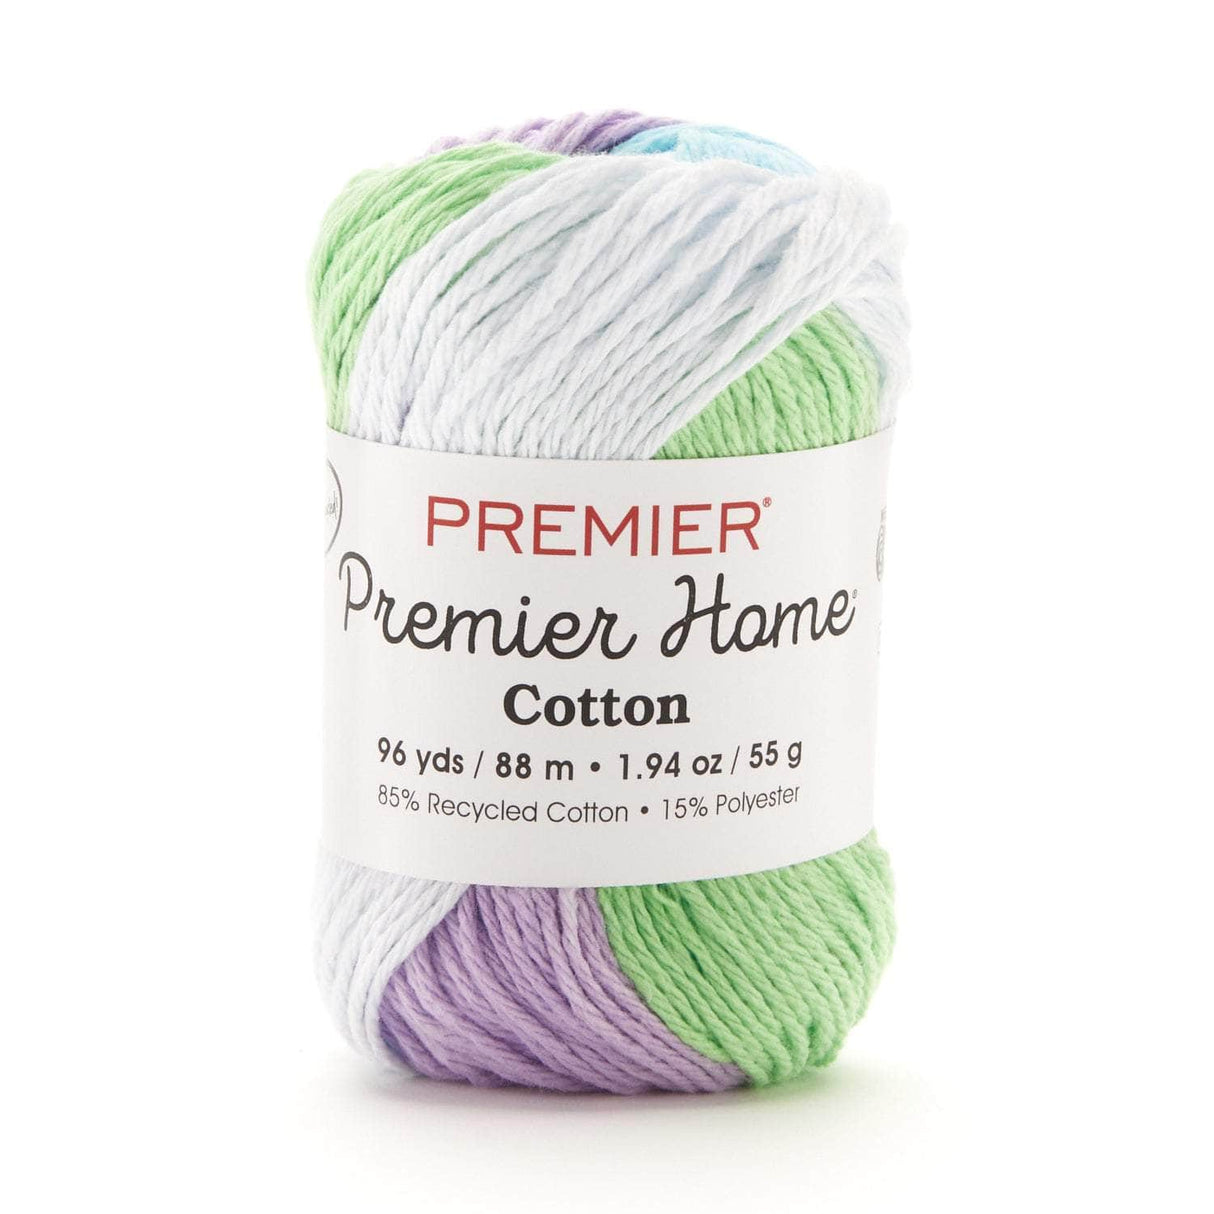 Premier Home Cotton Yarn